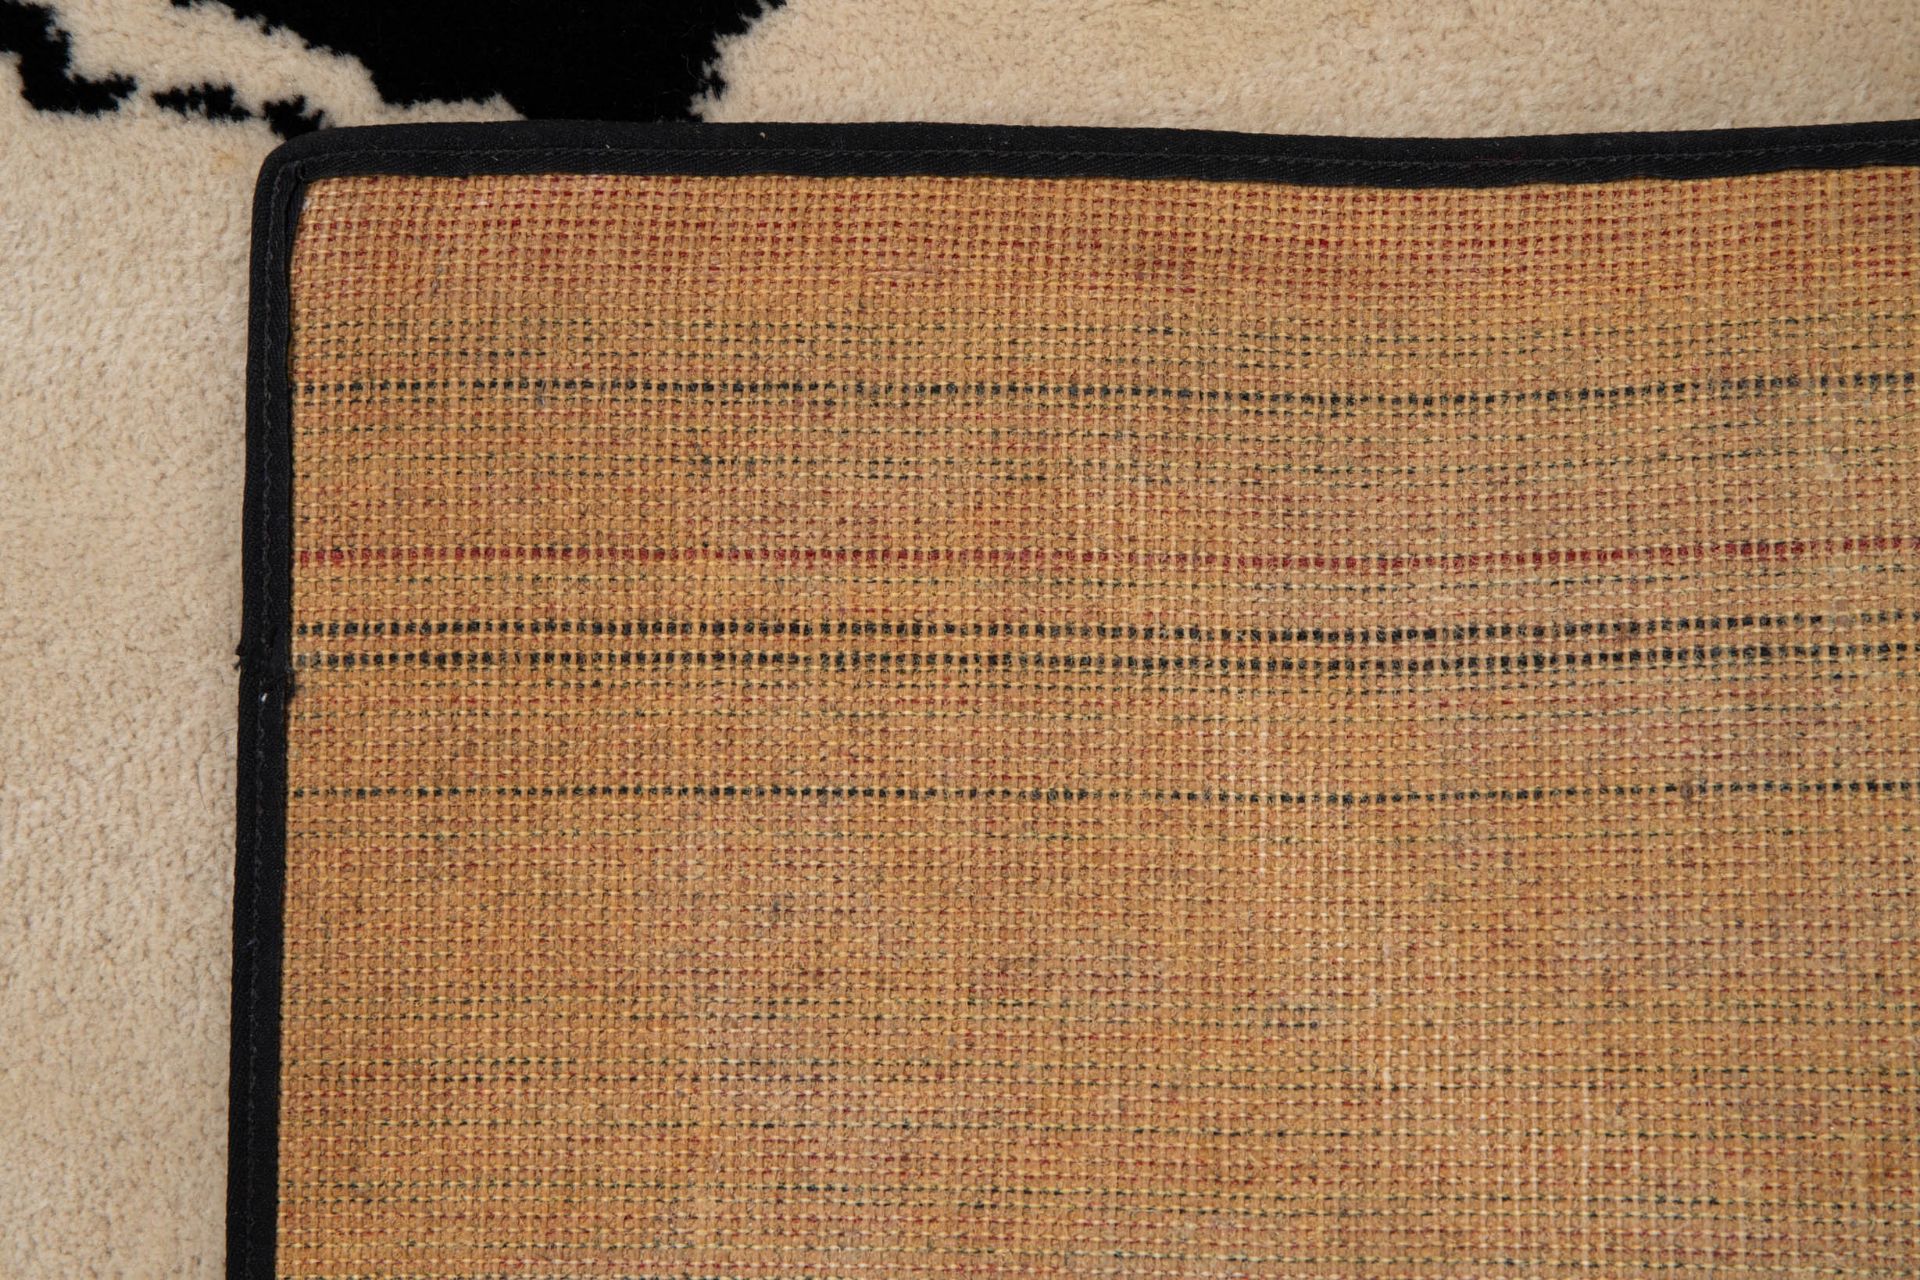 Enzo Cucchi, Vorwerk, Carpet from the Arterior series - Image 5 of 5